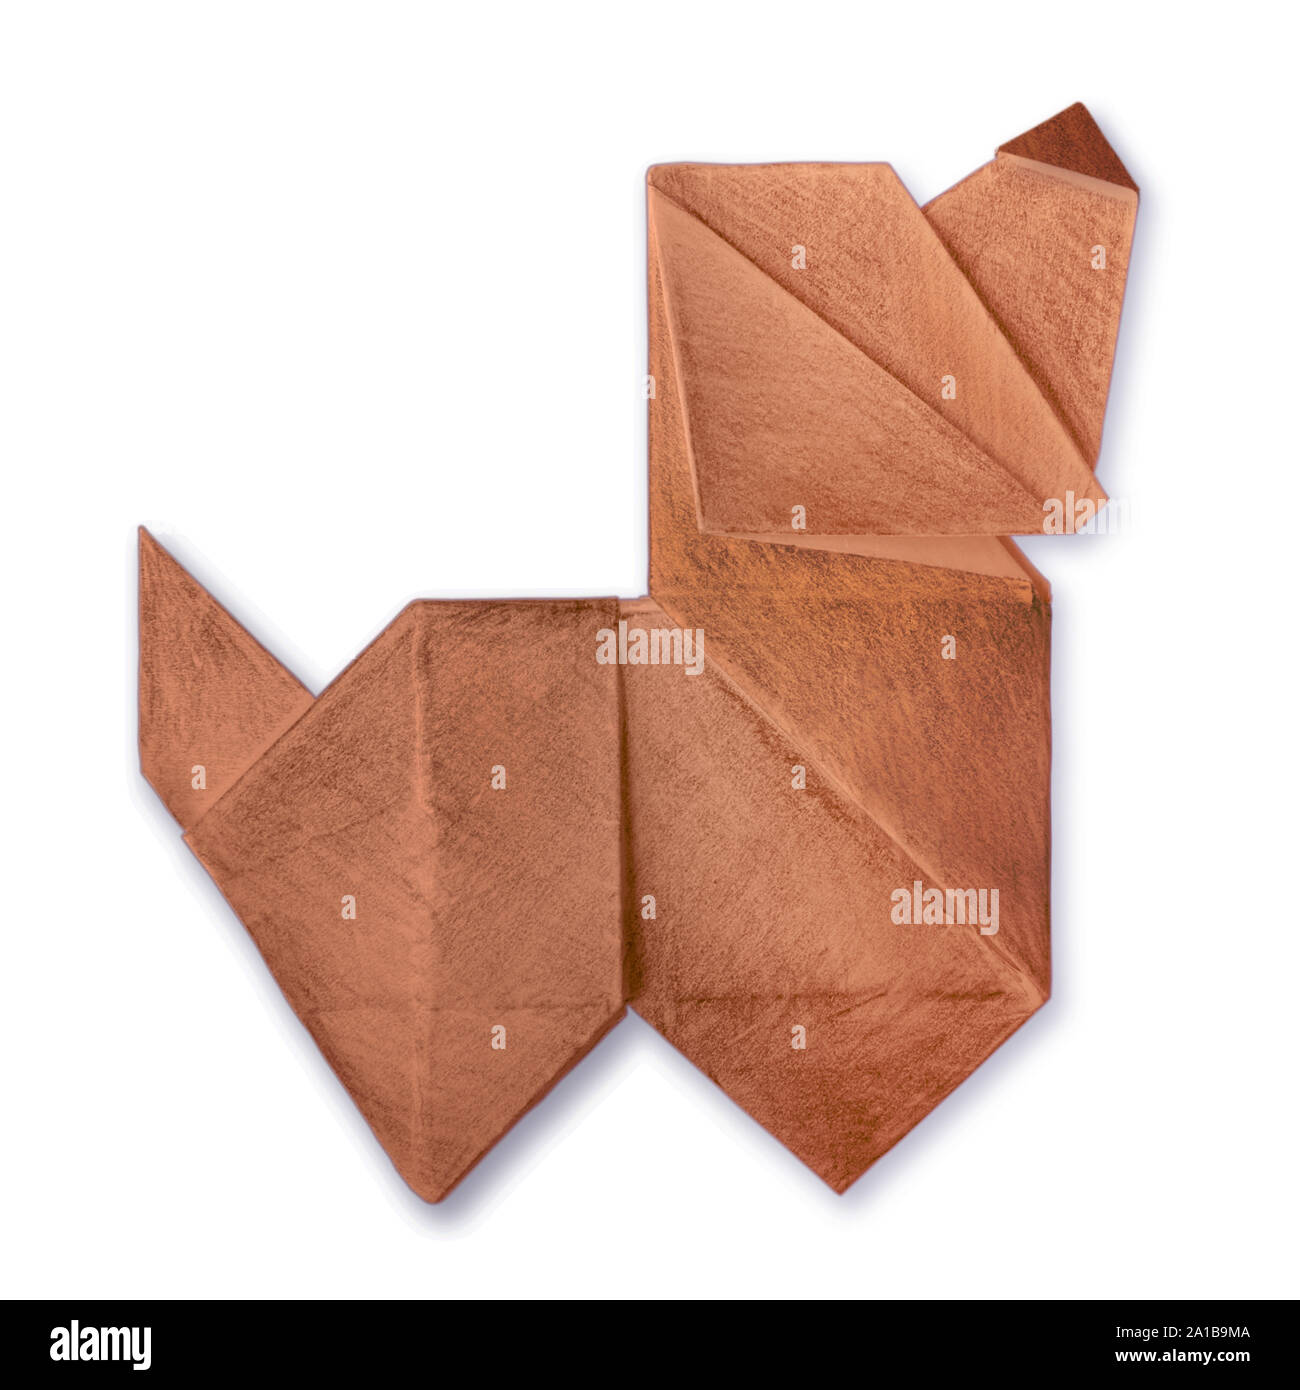 Flat Polygonal Origami Dog Stock Photo